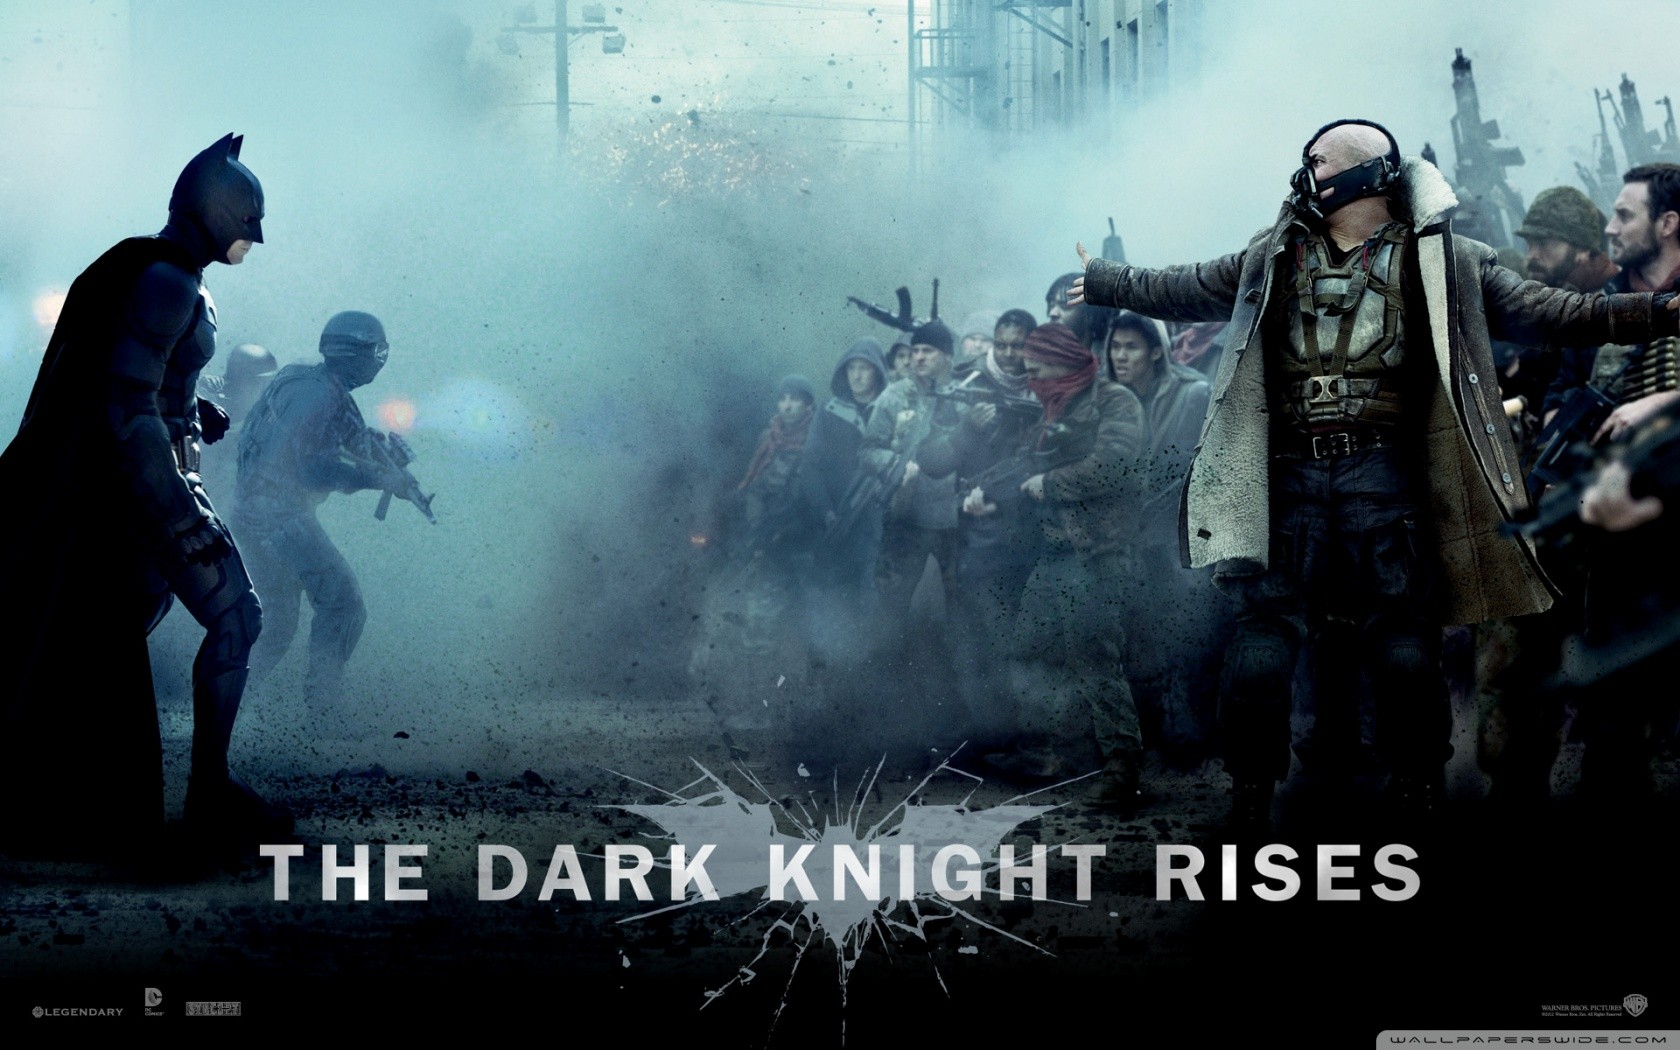 General 1680x1050 The Dark Knight Rises Bane Batman police AK-47 Heckler & Koch G36 crowds cyan film stills movie poster movies hero villains